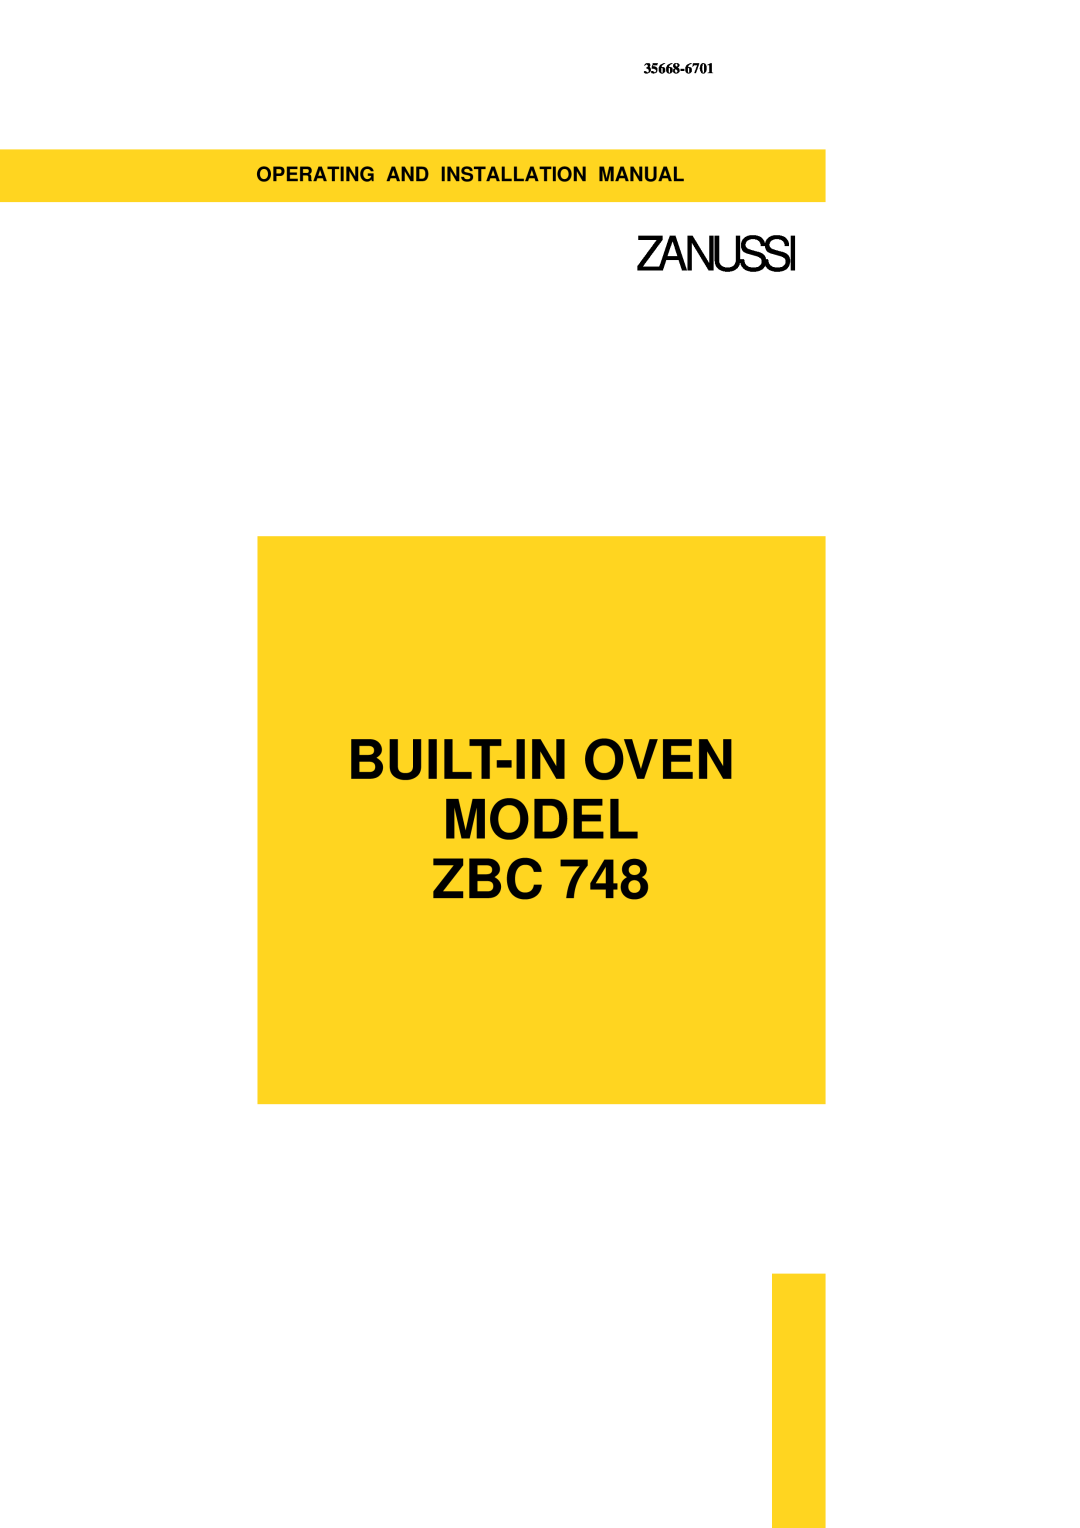 Zanussi ZBC 748 installation manual Built-In Oven Model Zbc, Zanussi, Operating And Installation Manual, 35668-6701 